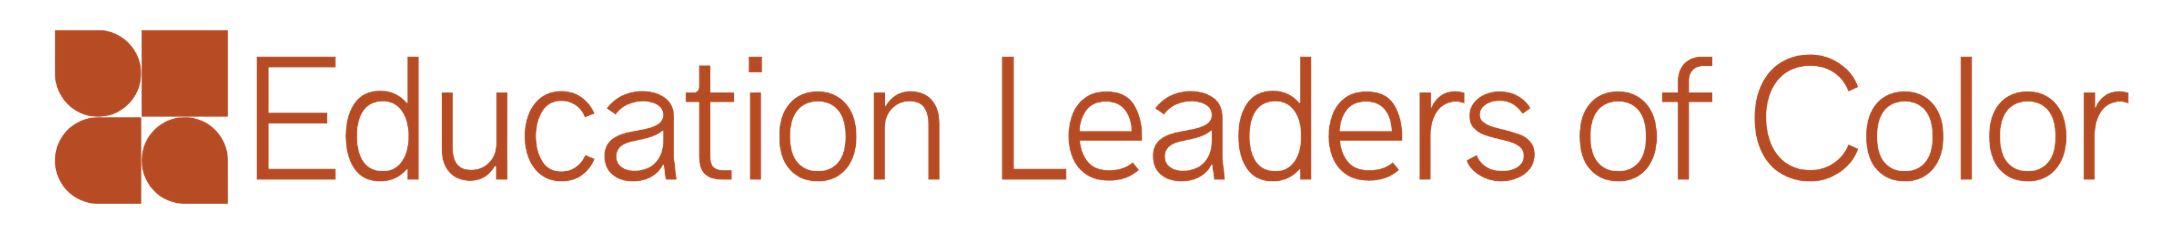 Education Leaders of Color Application Portal logo